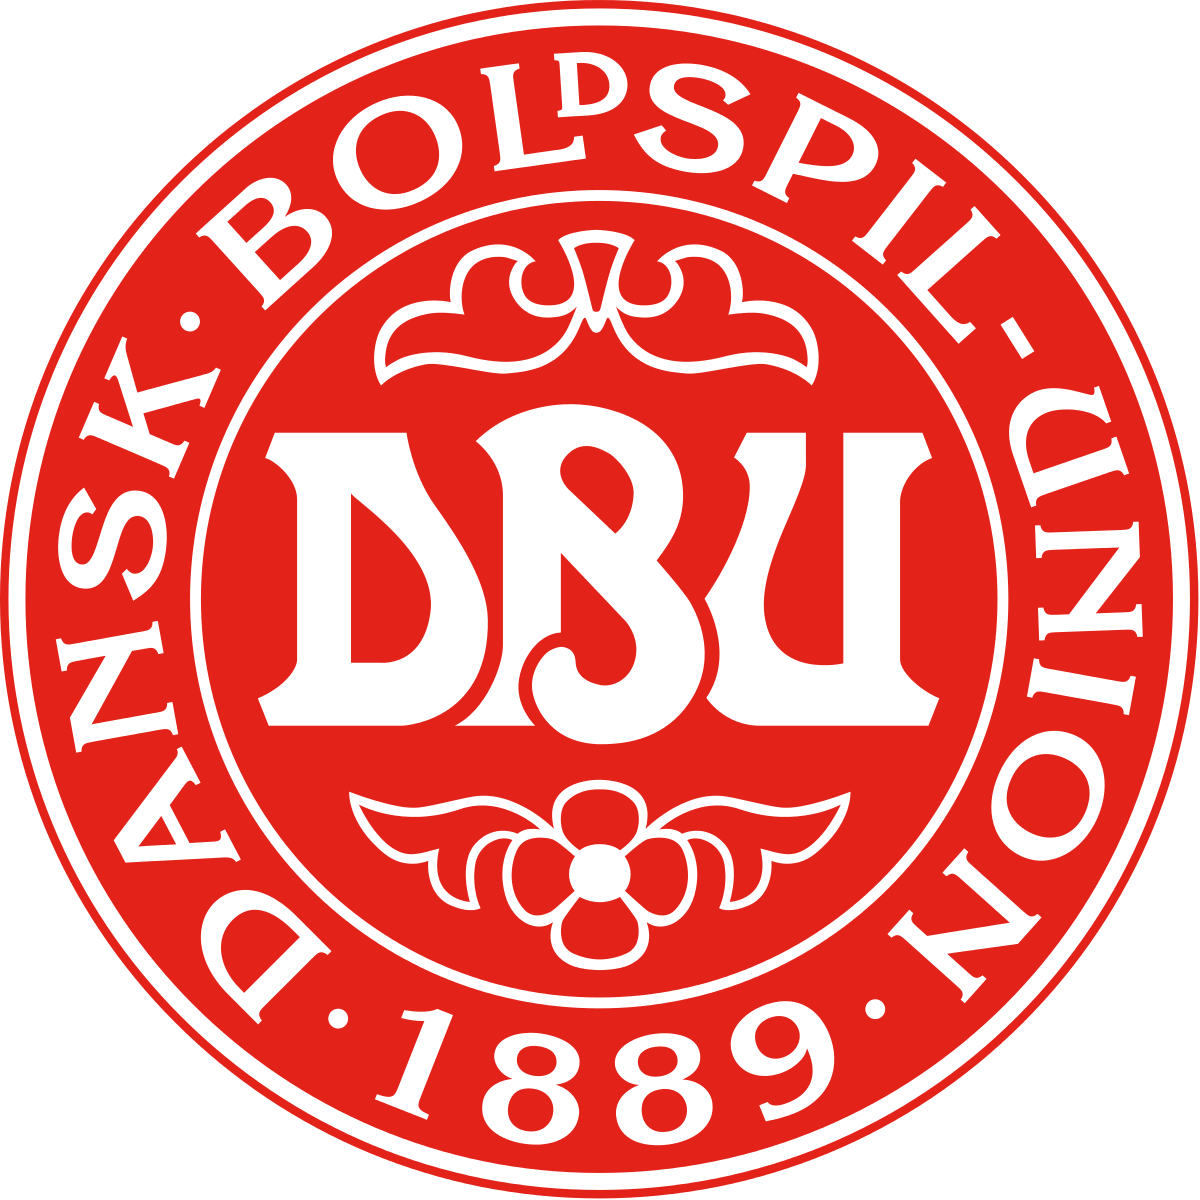 Foreign Soccer Logo - Denmark national football team